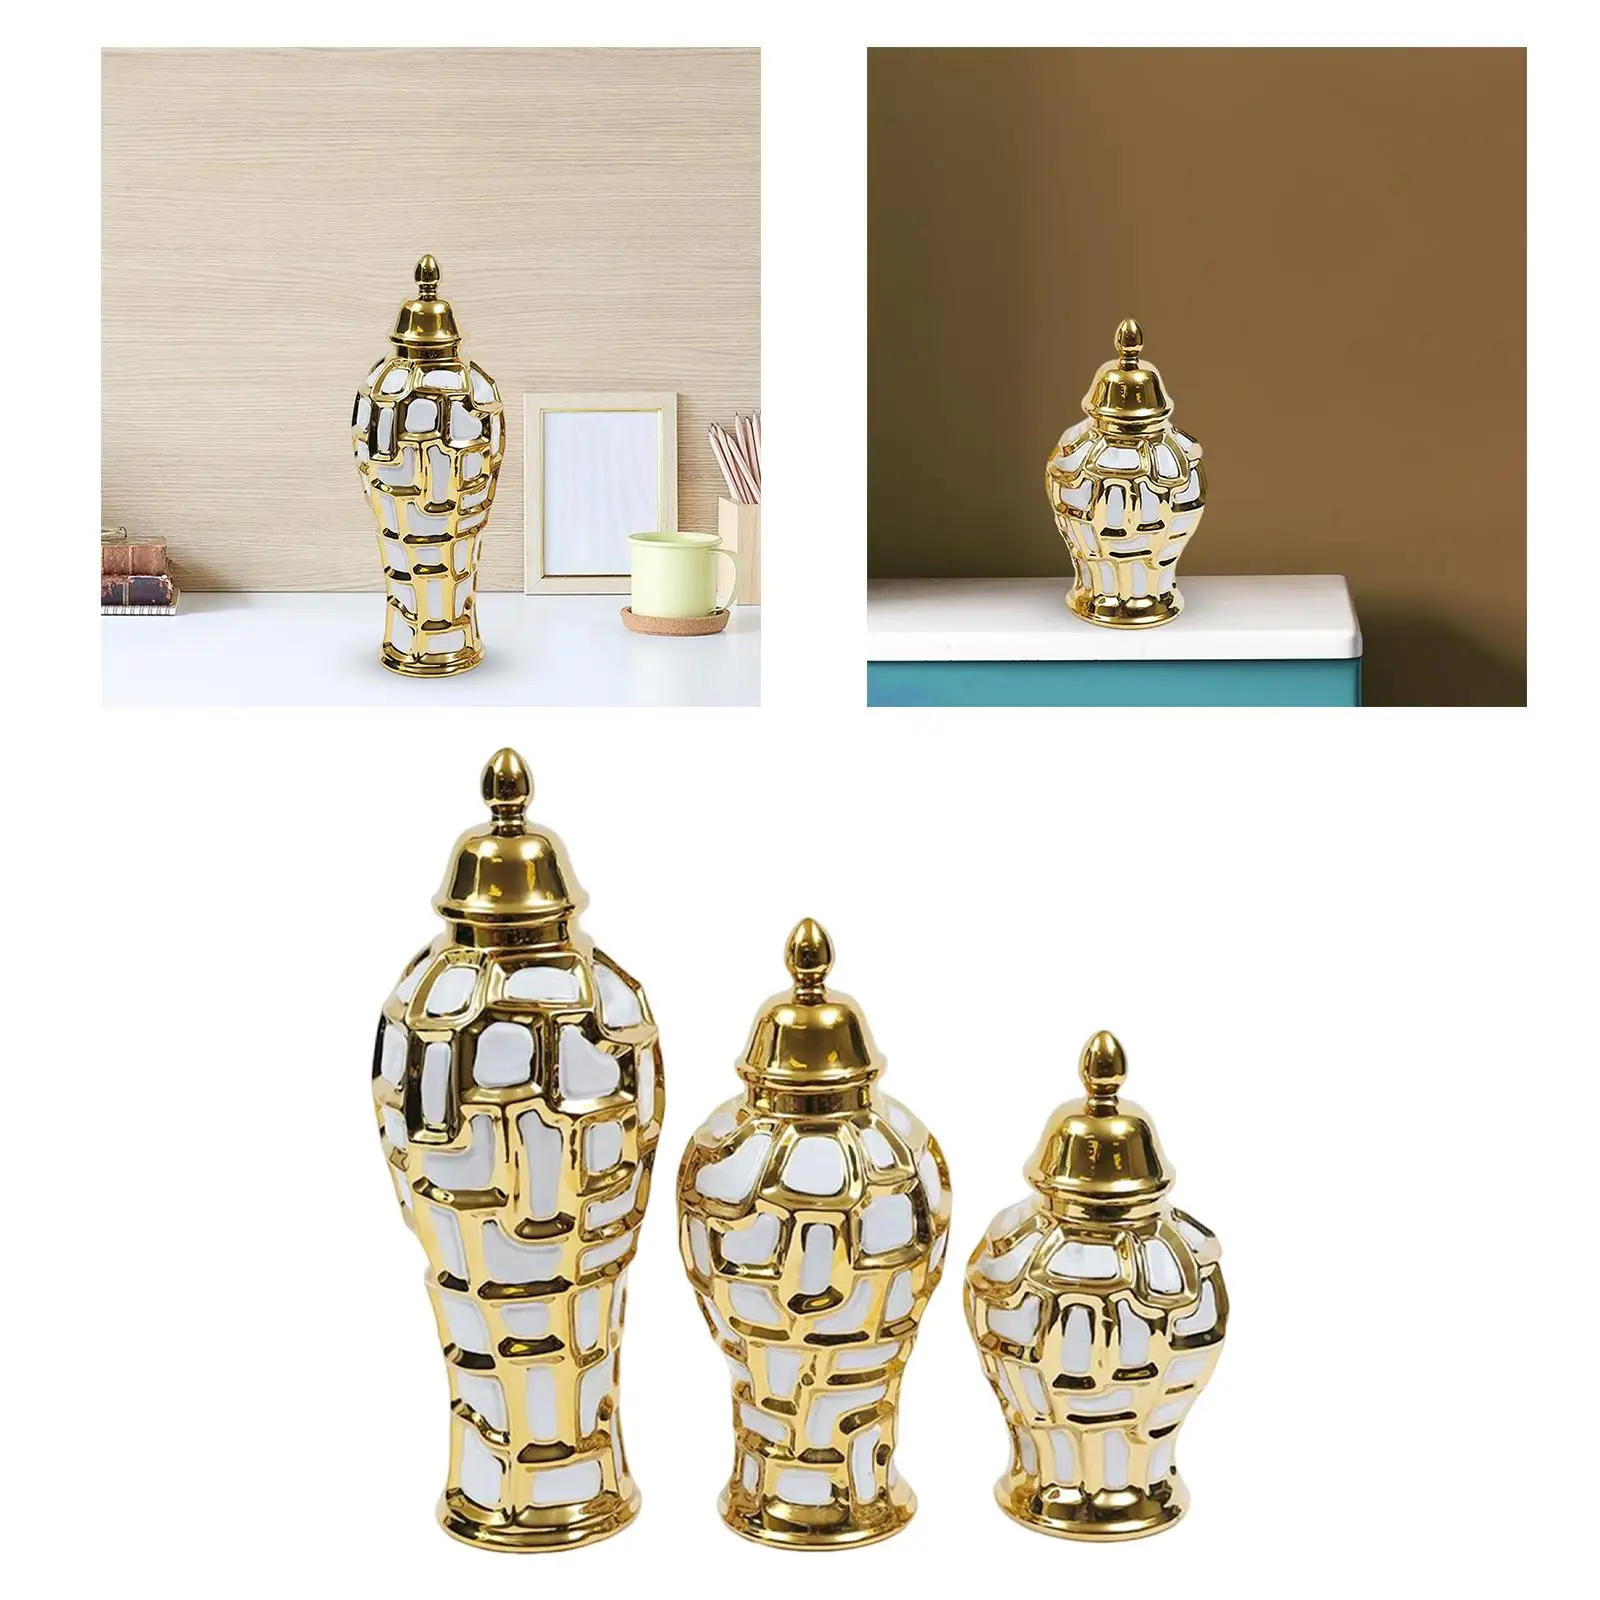 Modern Ceramic General Jar with Lid Flower Vase Table Centerpiece Handicraft for